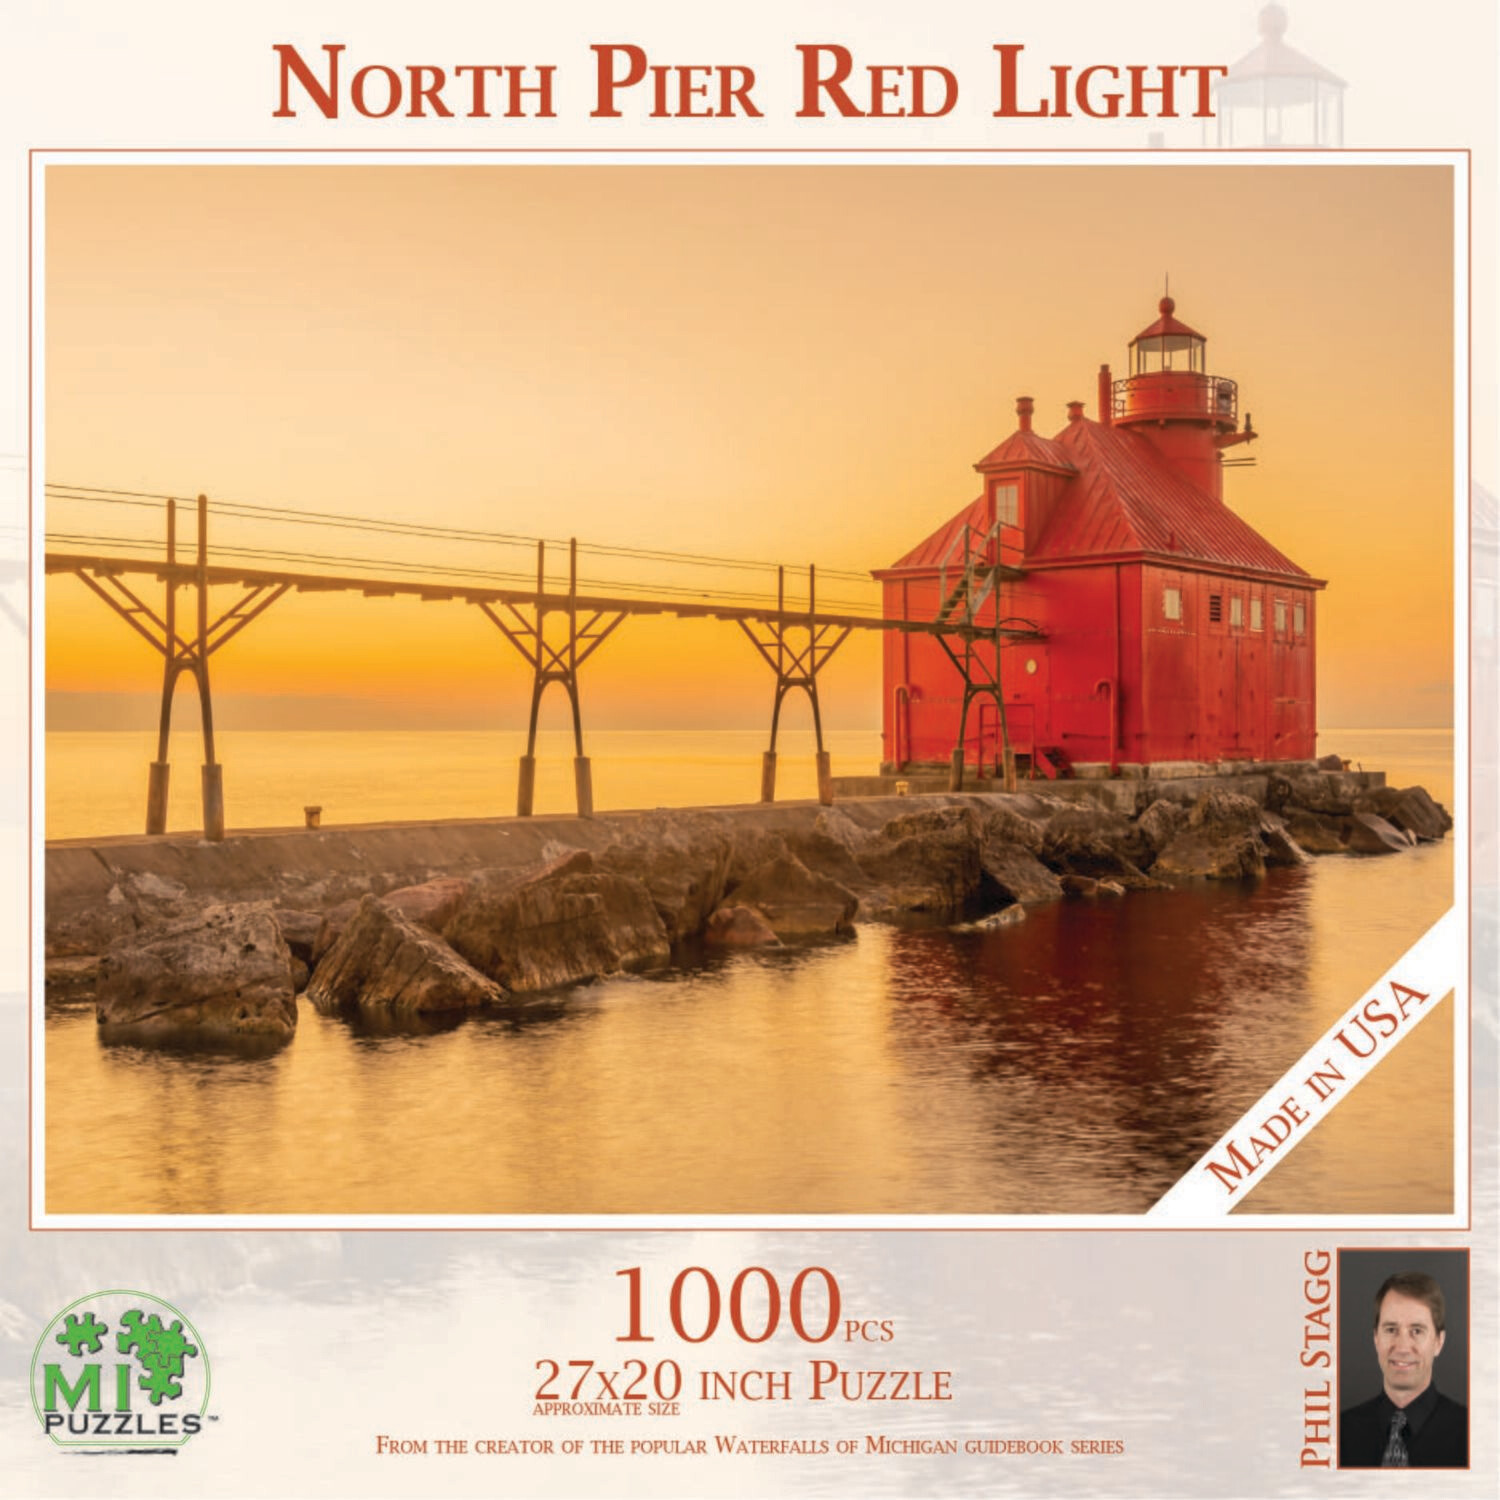 NORTH PIER RED LIGHT